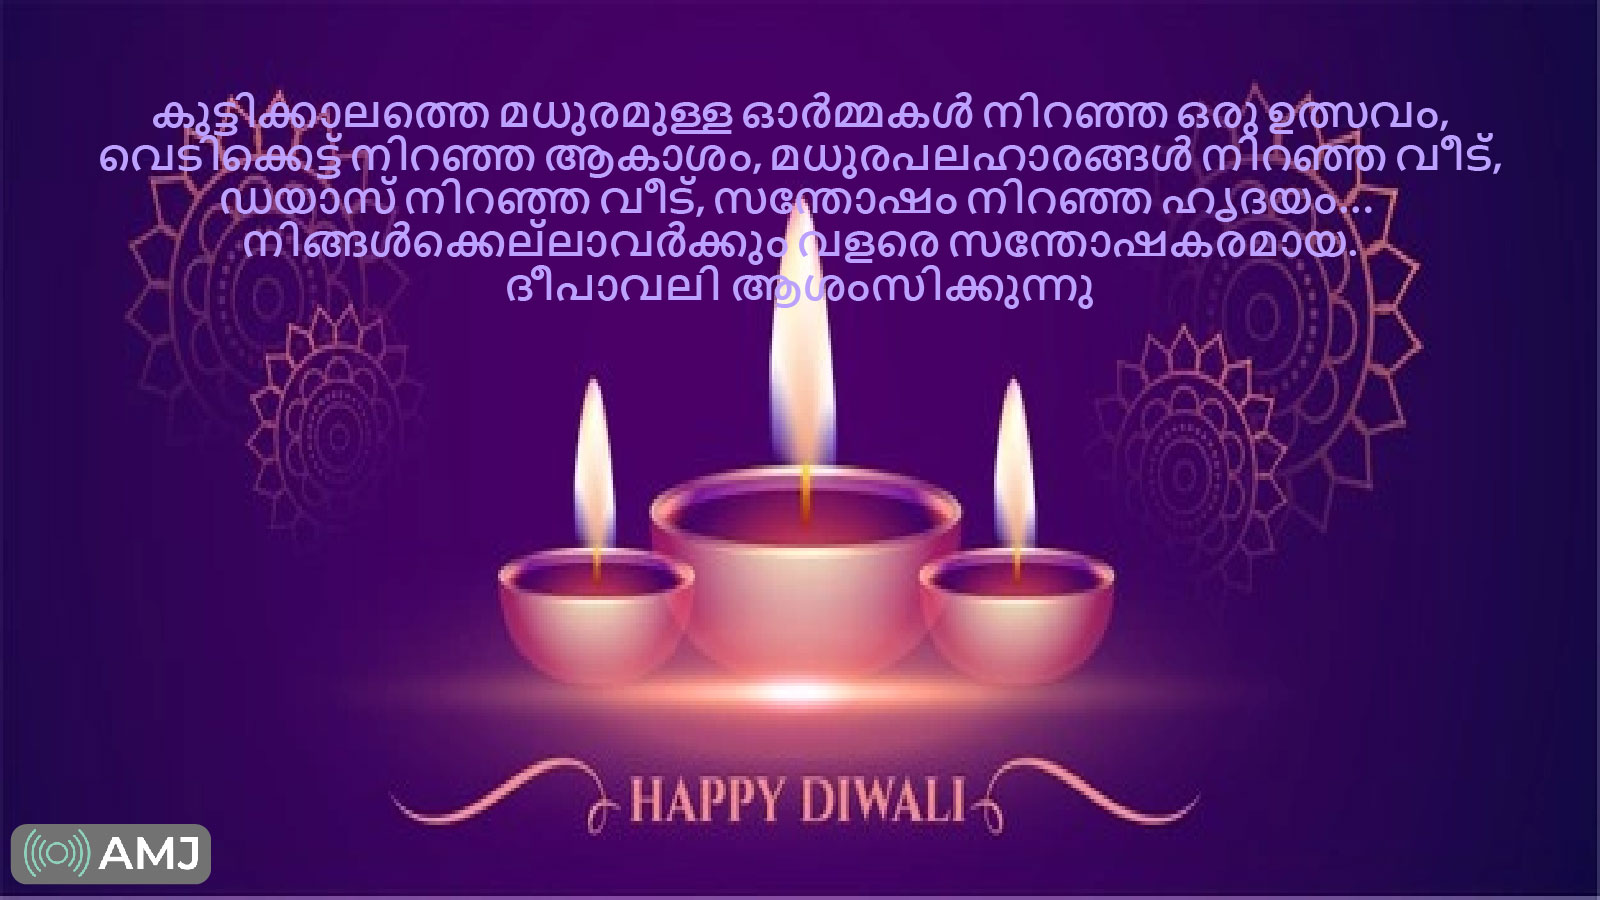 Happy Diwali Wishes in Malayalam